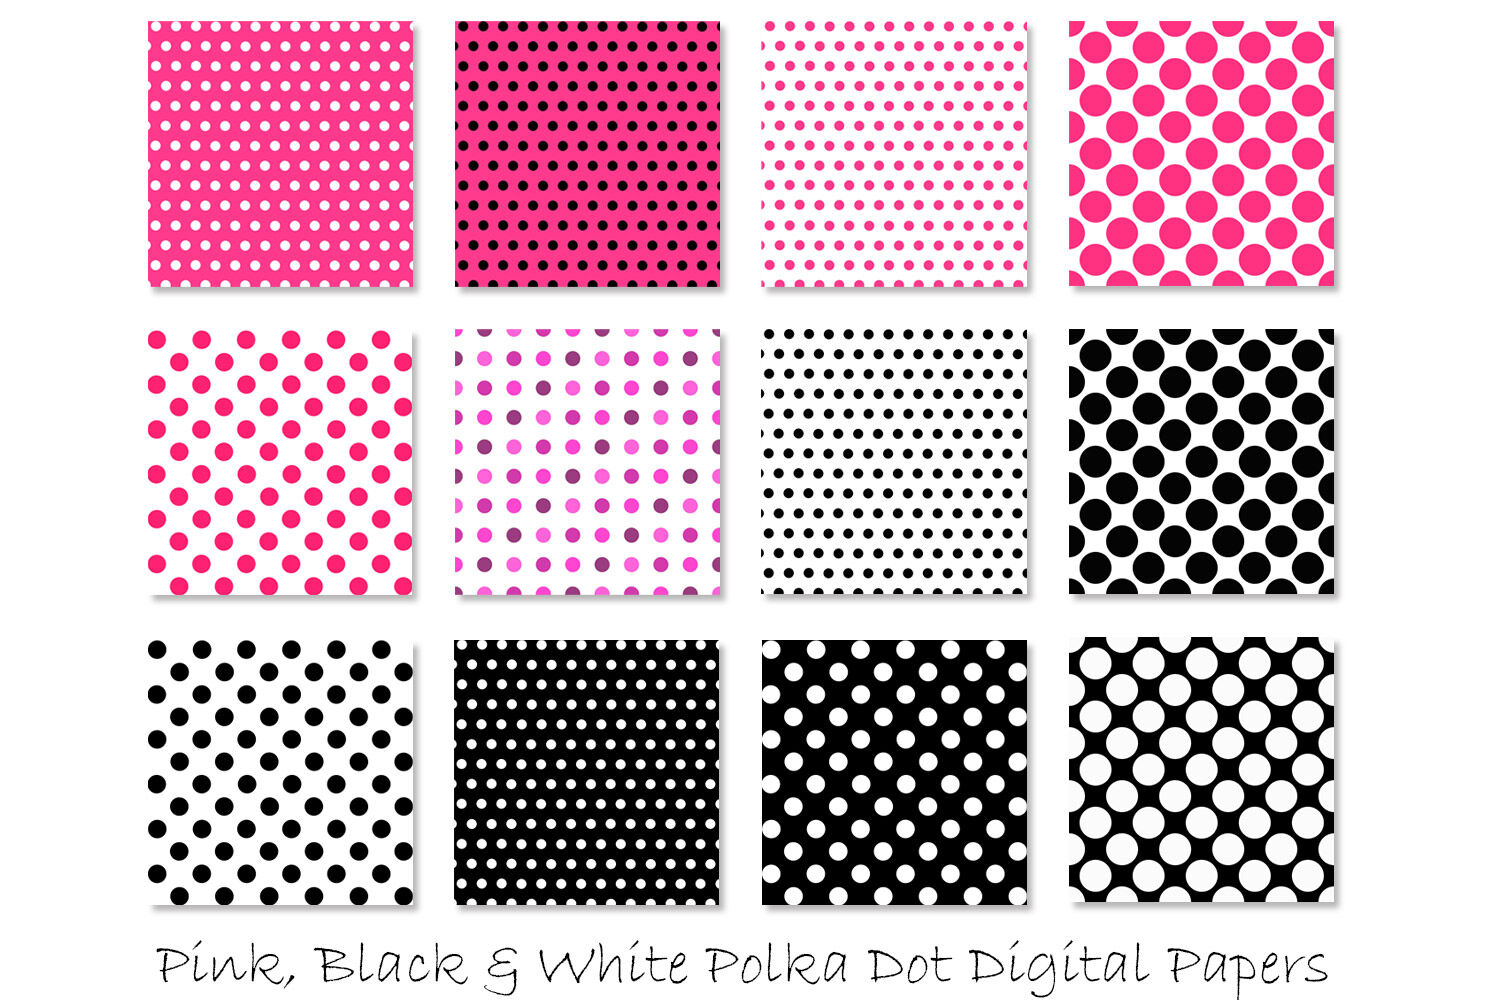 5. Black and white polka dot design on black nail polish - wide 6